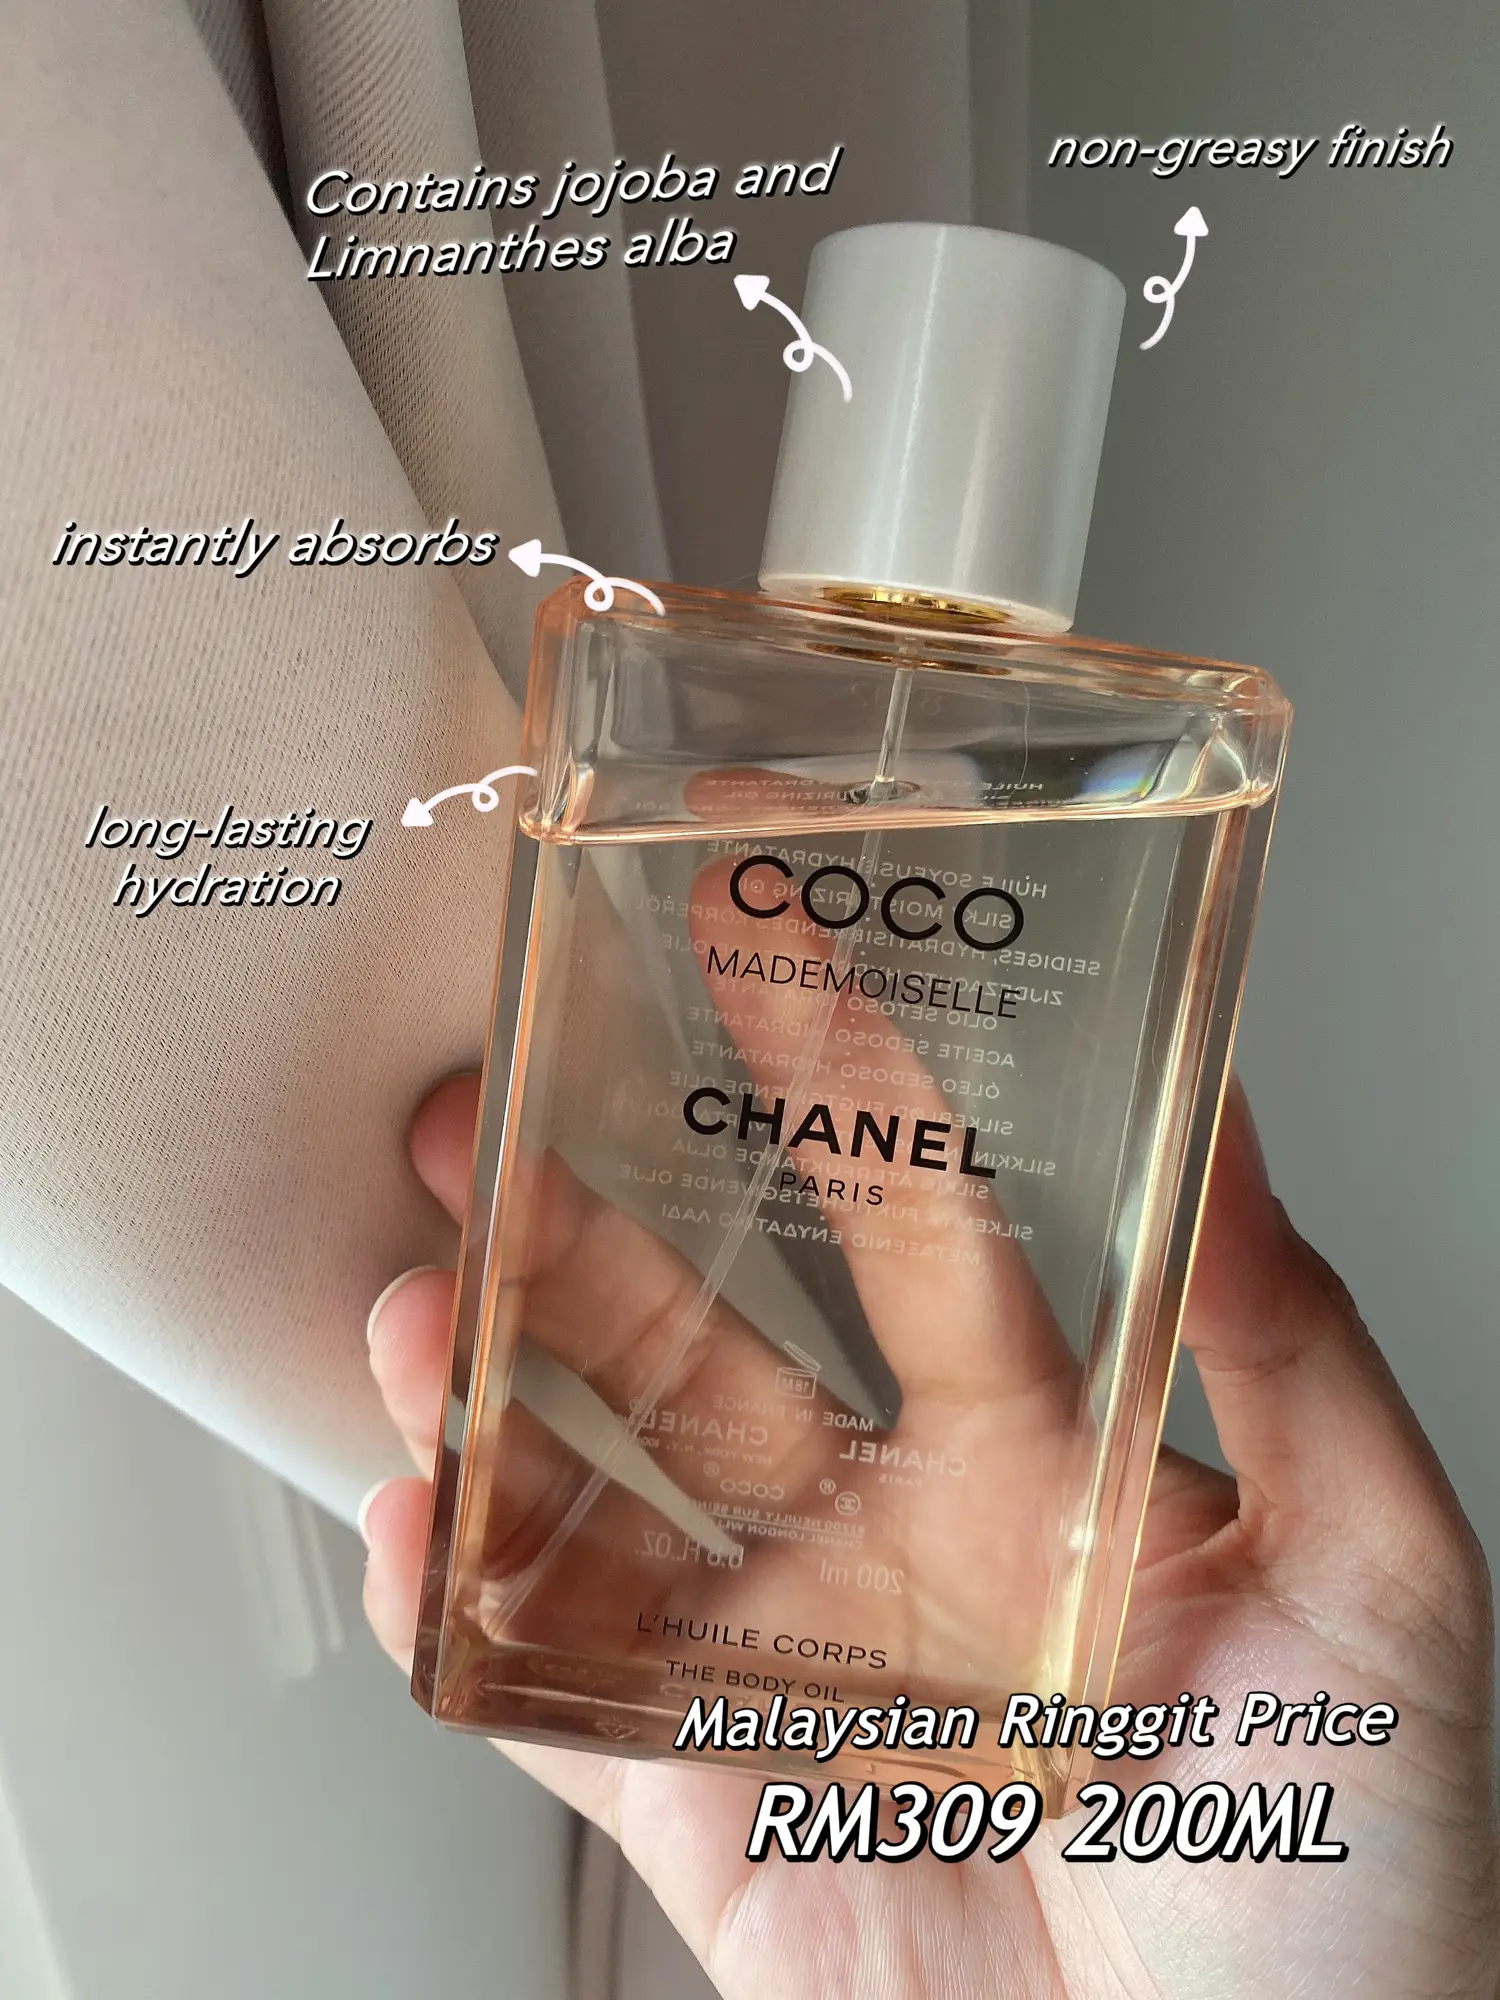 coco chanel fragrance oil